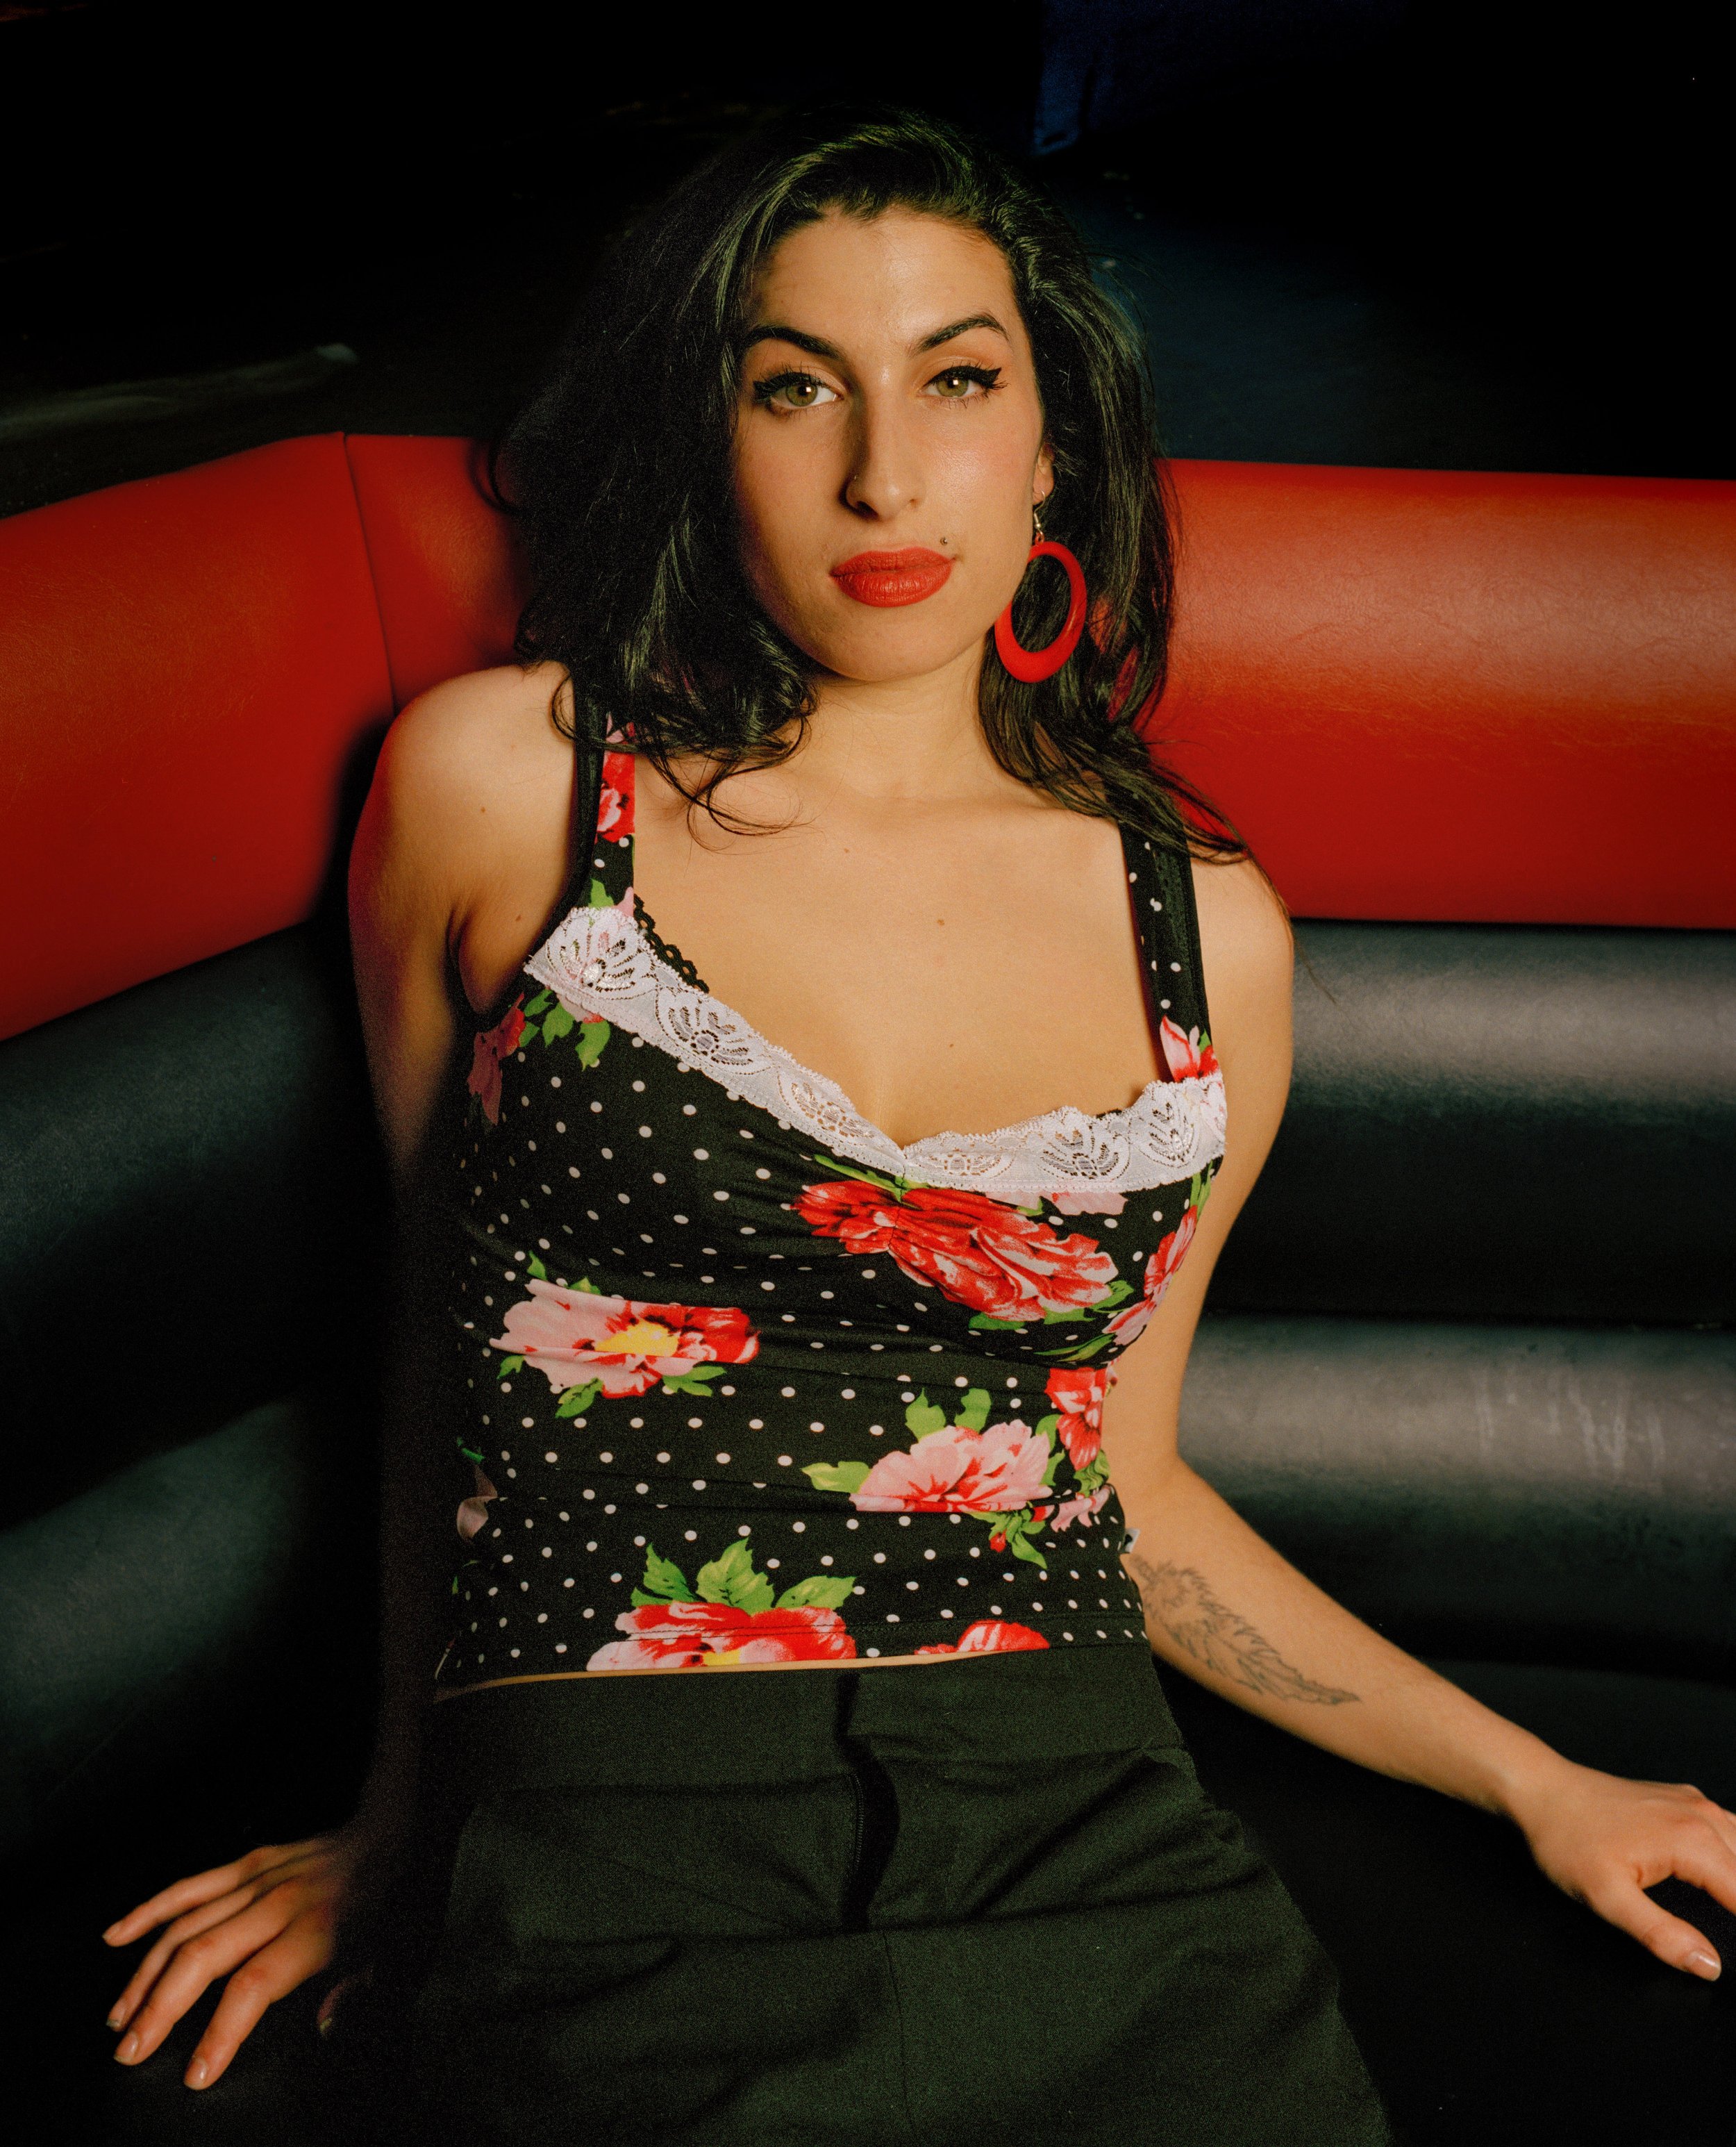  Amy Winehouse, 2003 